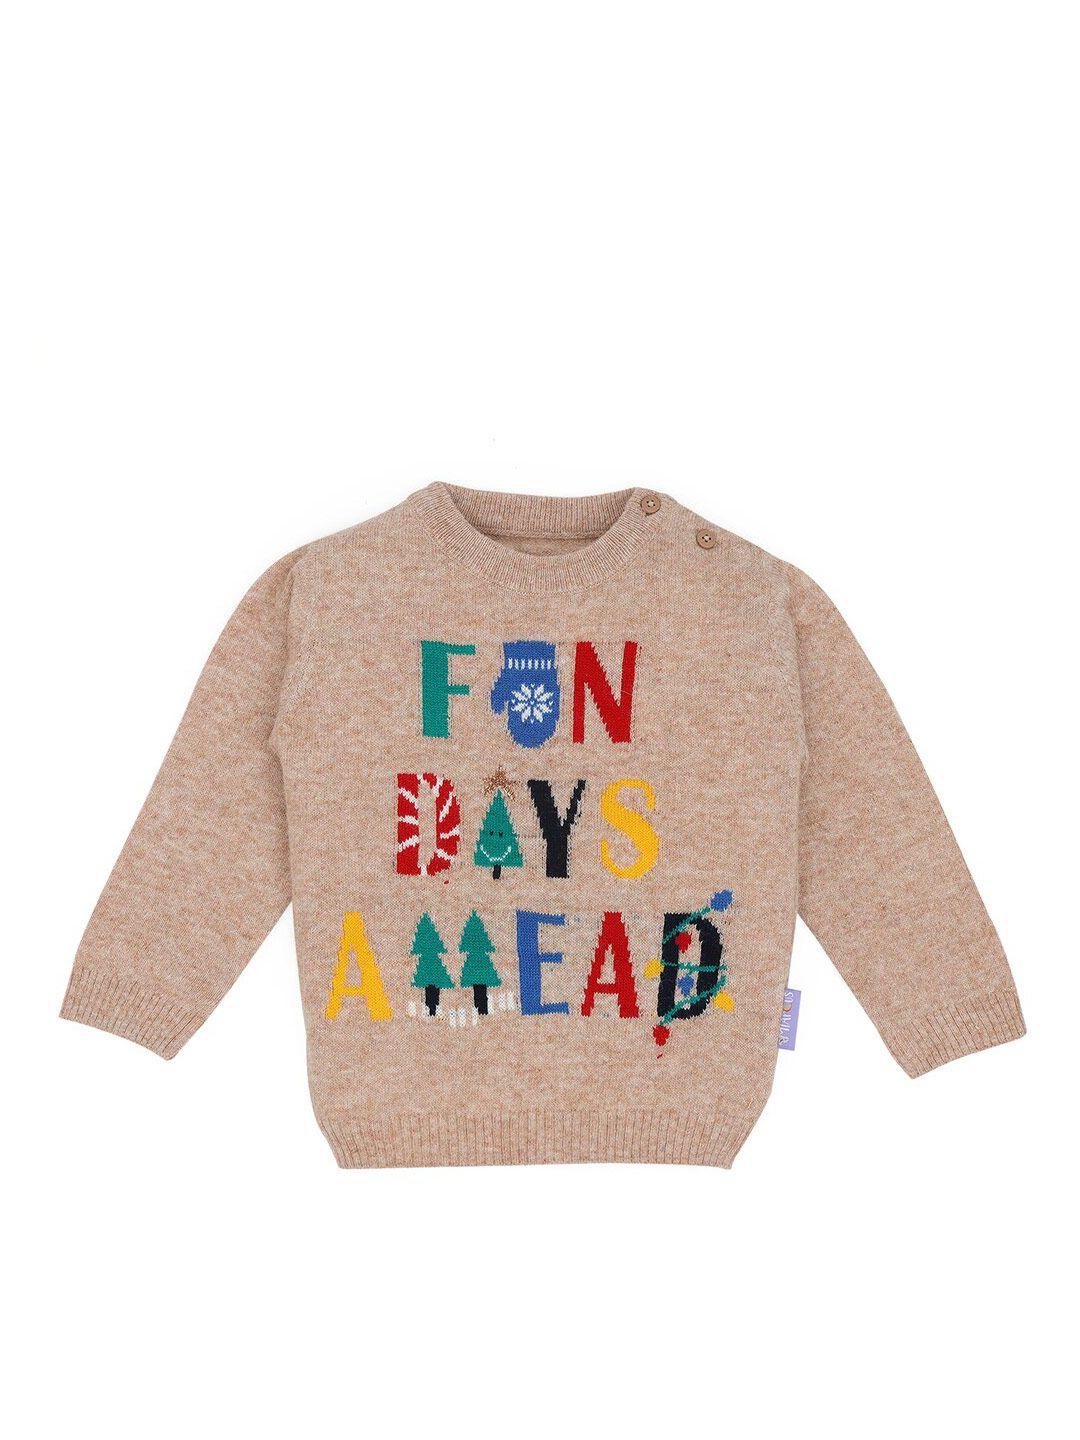 miarcus kids typography woven design cotton sweater